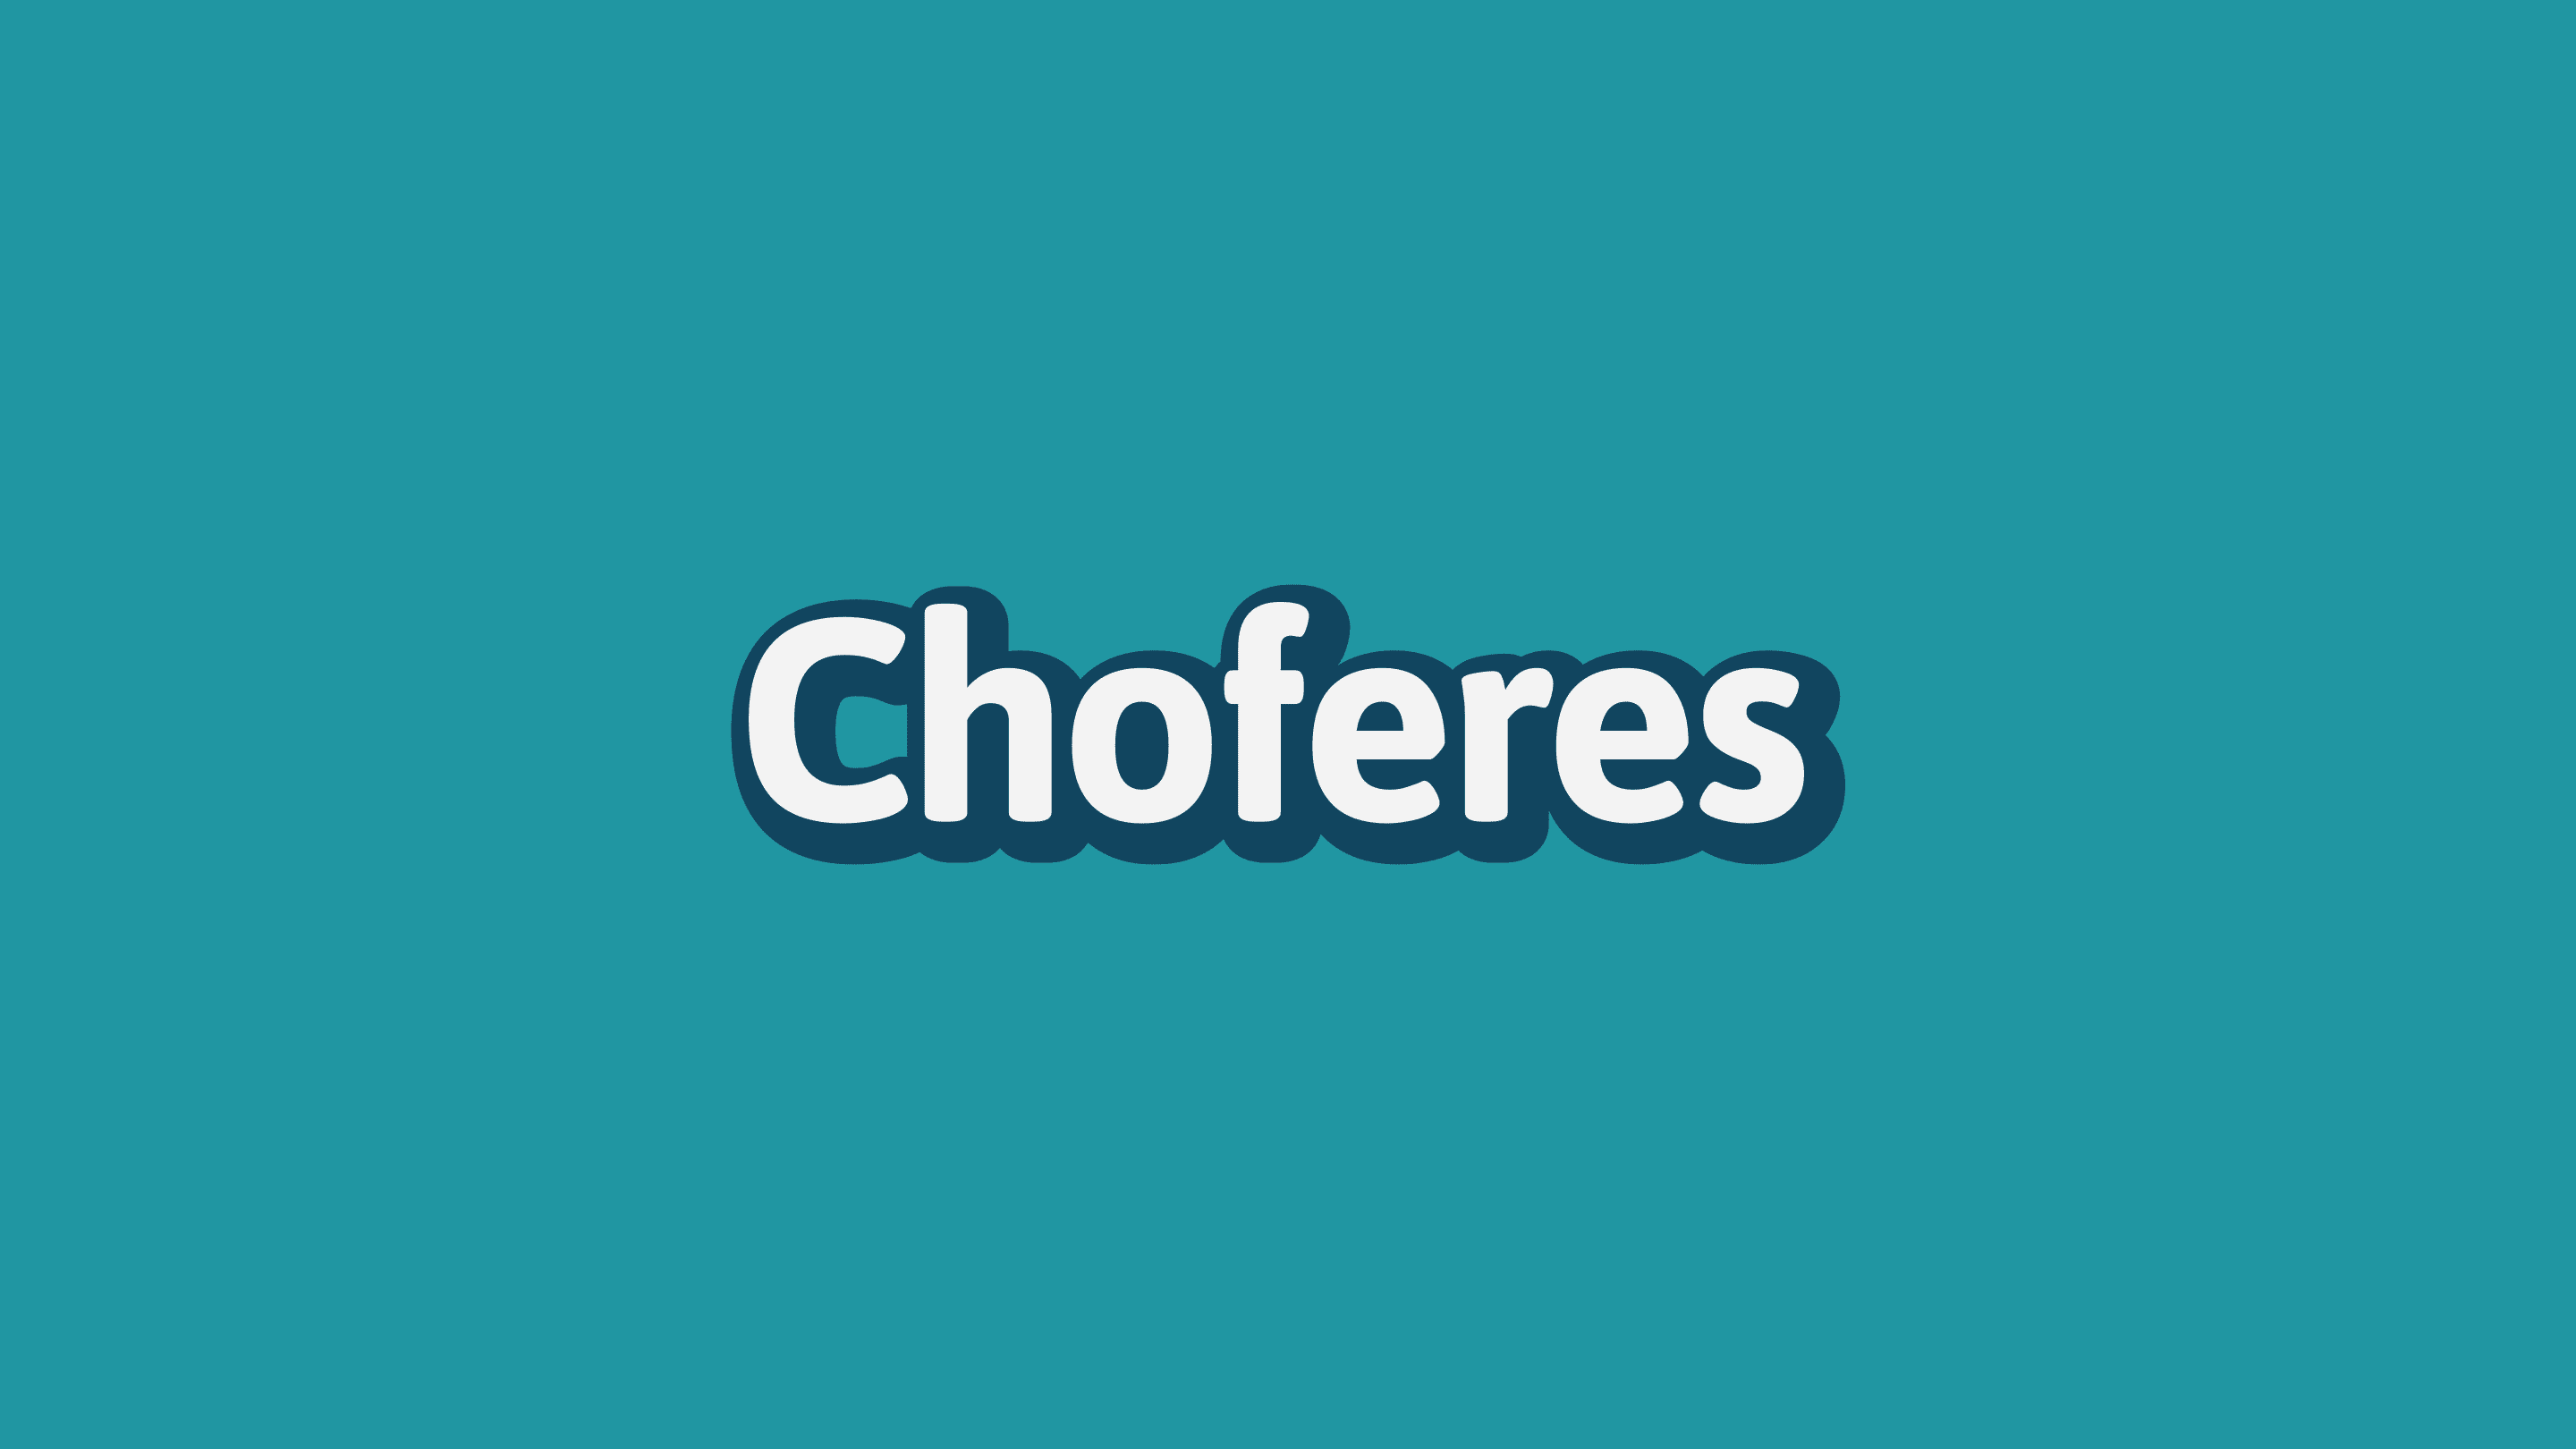 Choferes